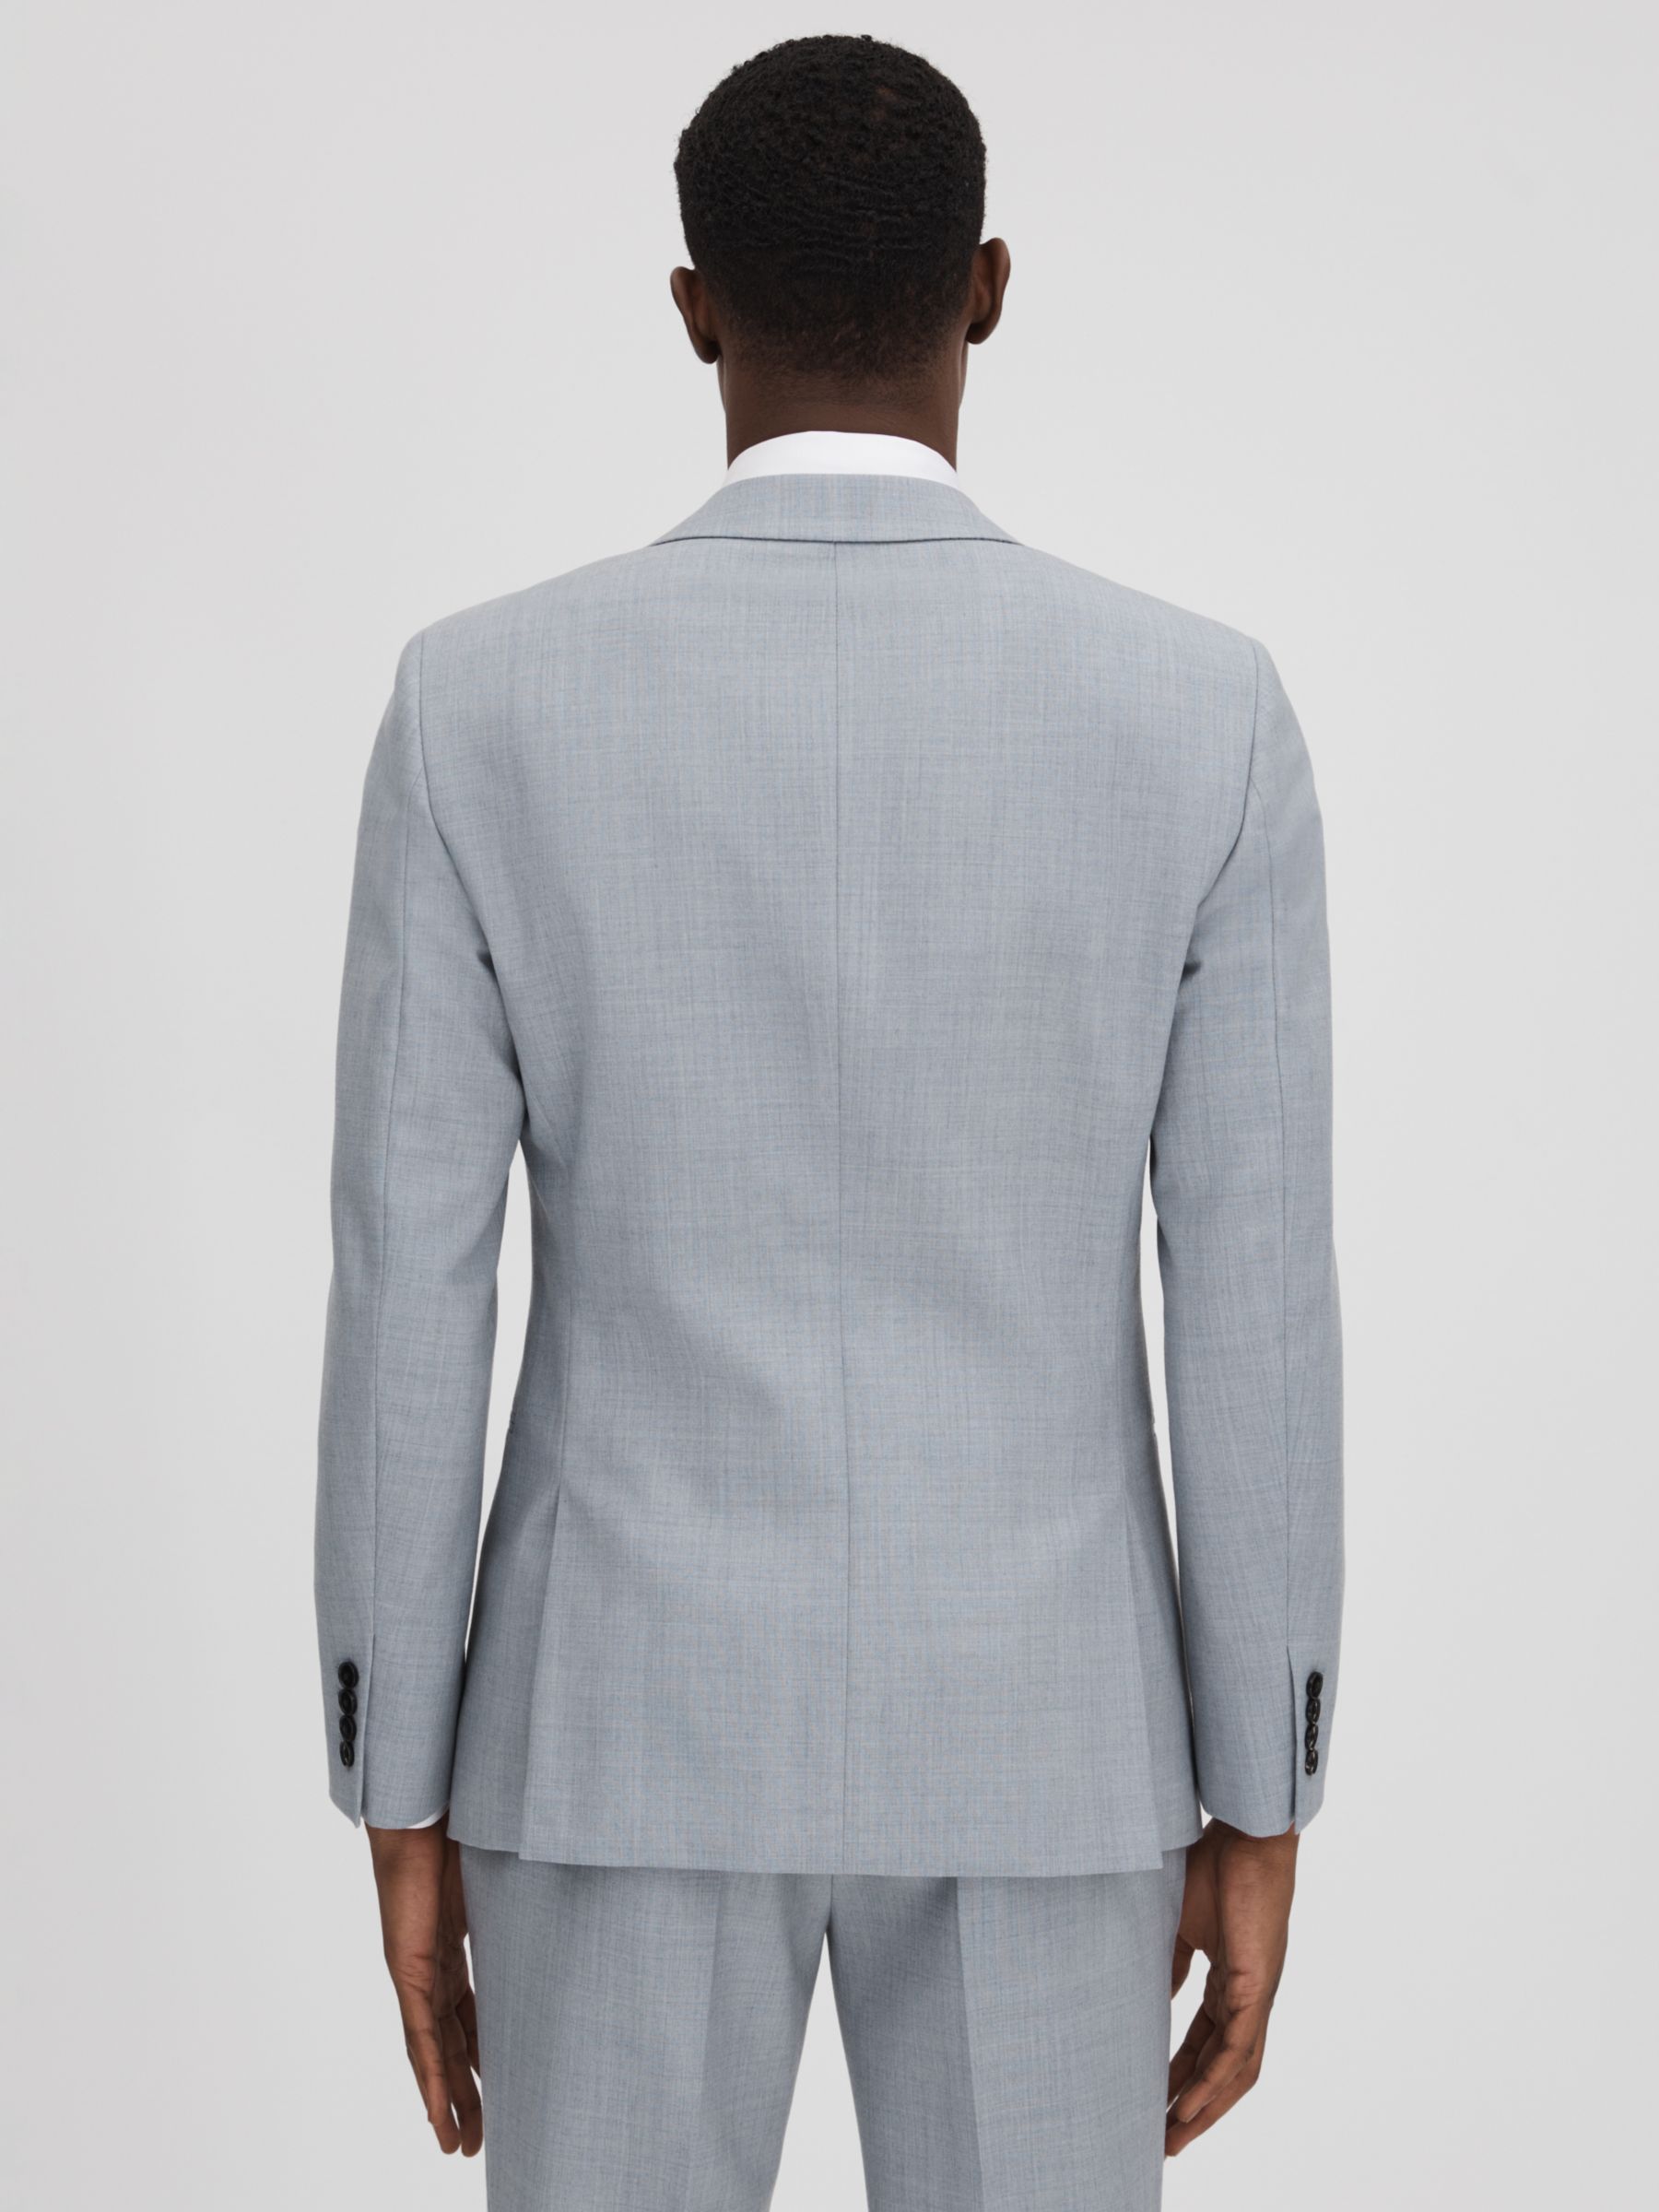 Reiss Dandy Tailored Fit Suit Jacket, Soft Blue, 44